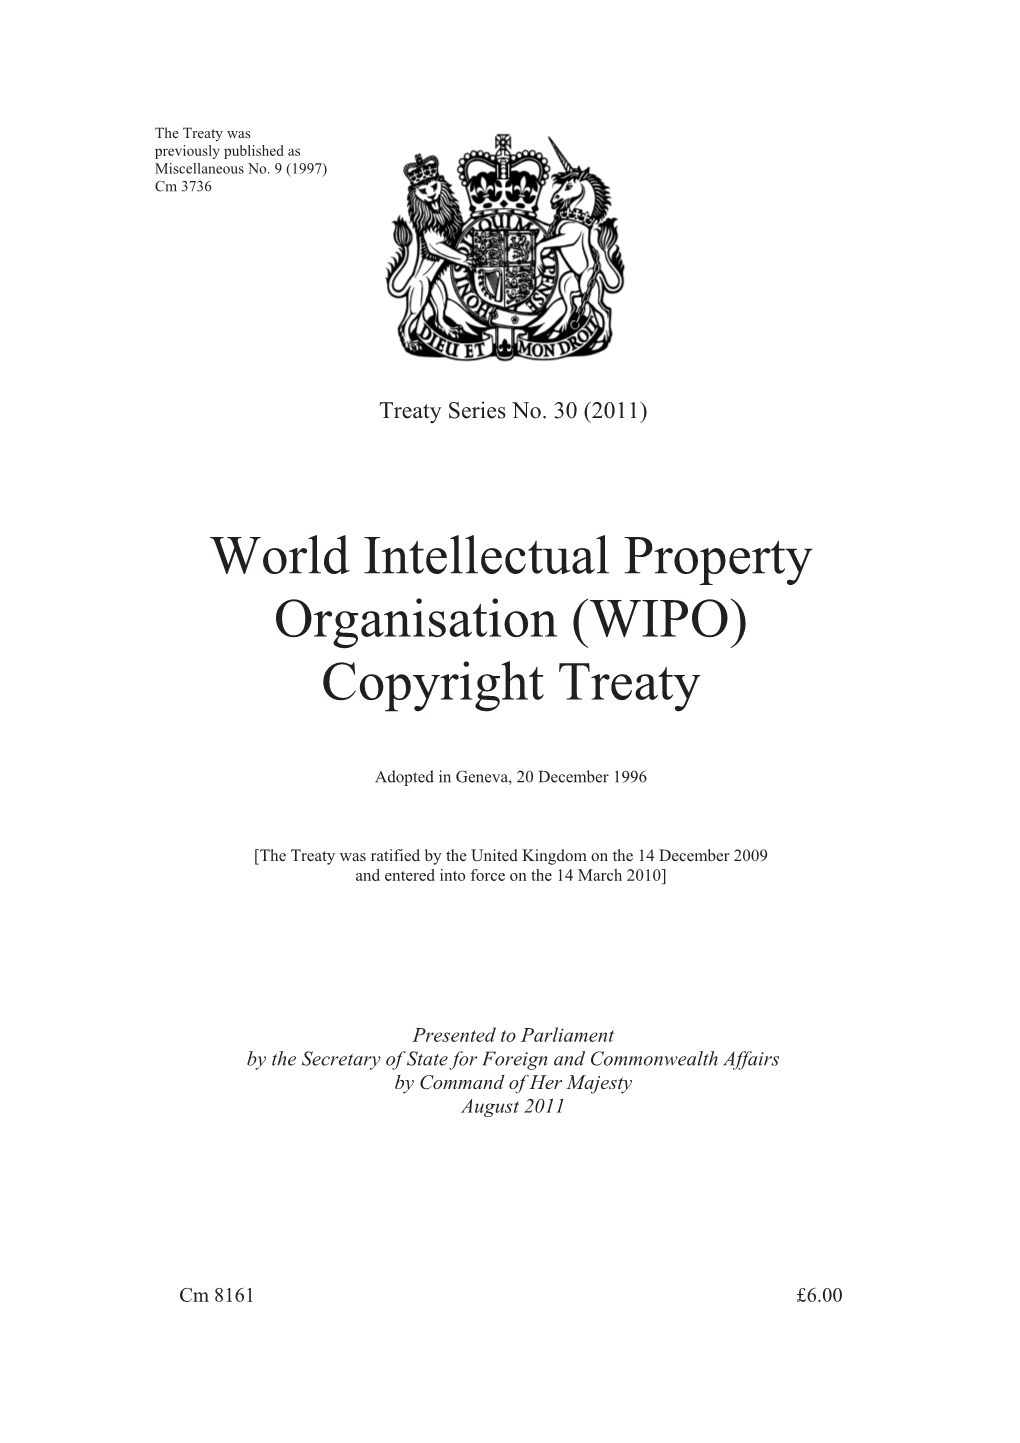 World Intellectual Property Organisation (WIPO) Copyright Treaty